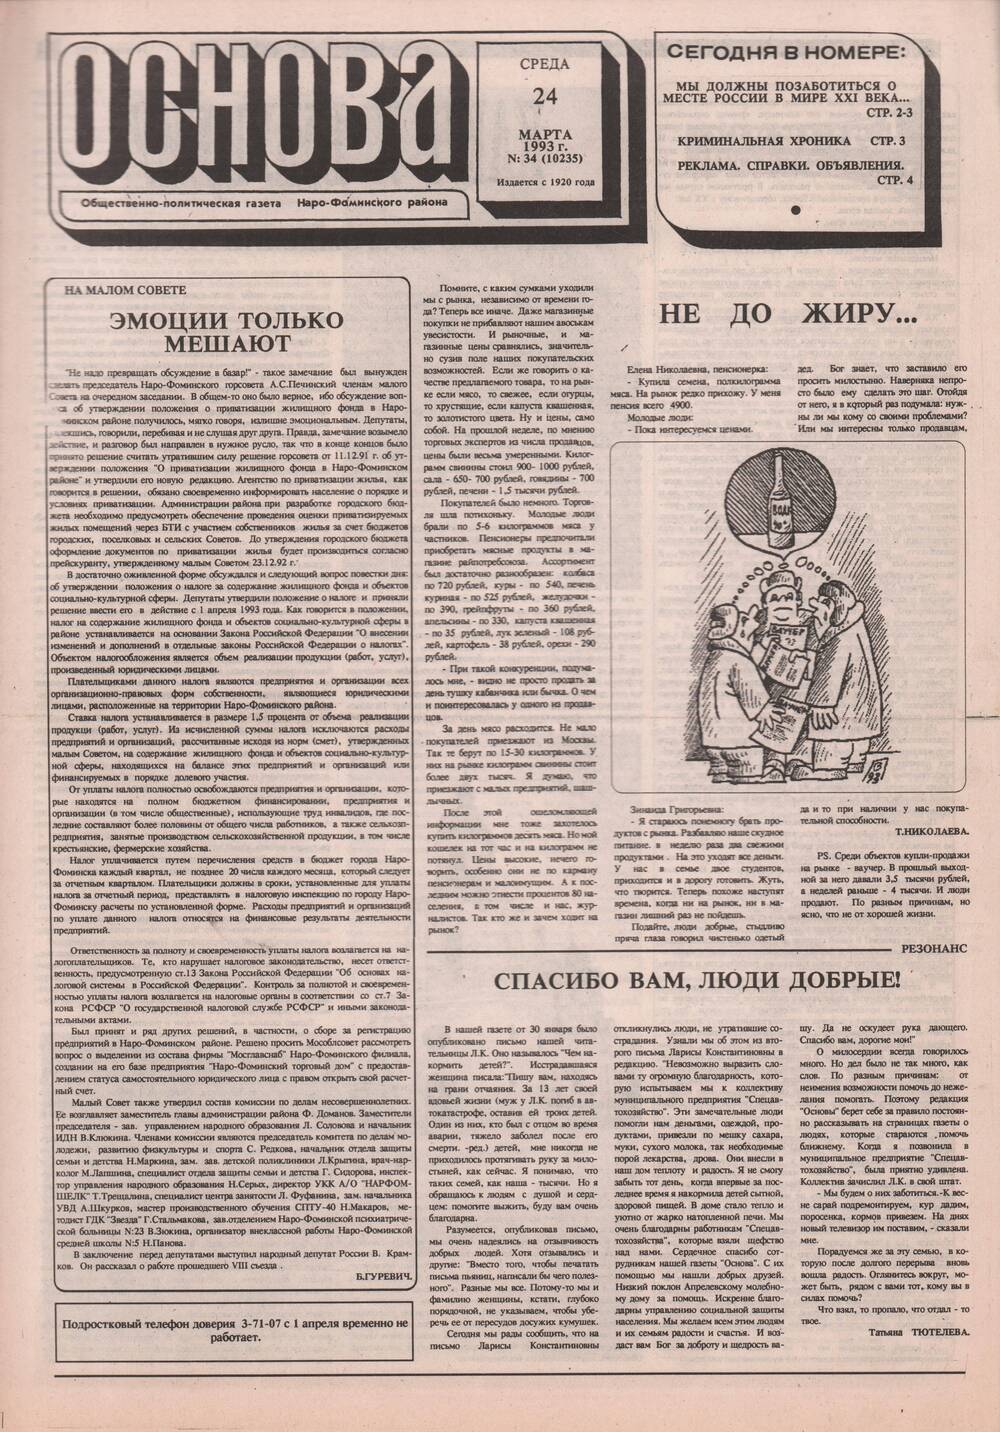 Газета «Основа» №34 (10235)